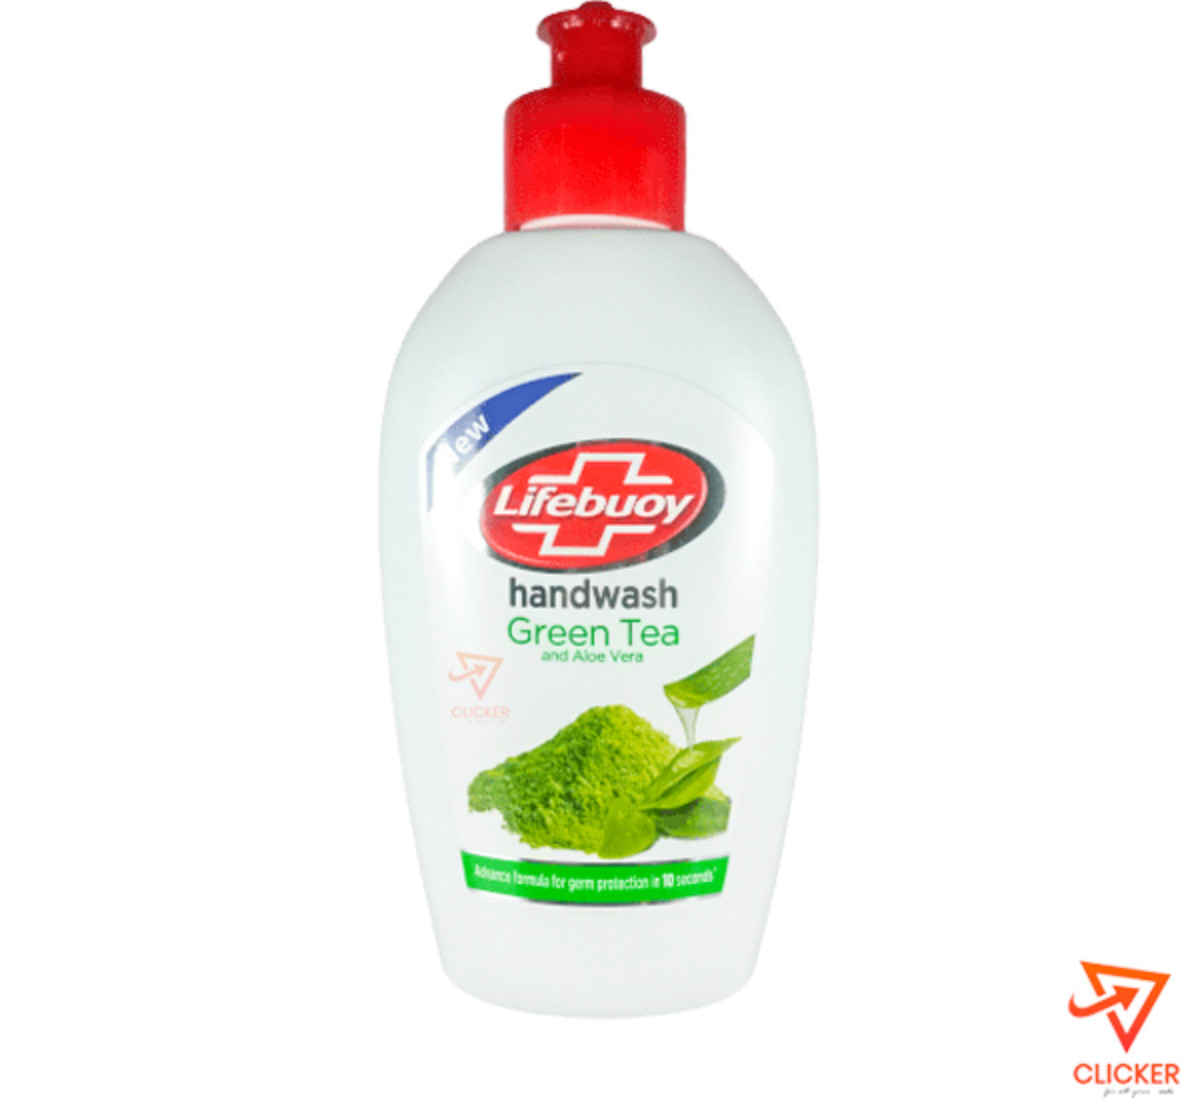 Clicker product 200ml LIFEBUOY handwash greentea and aloevera 1016